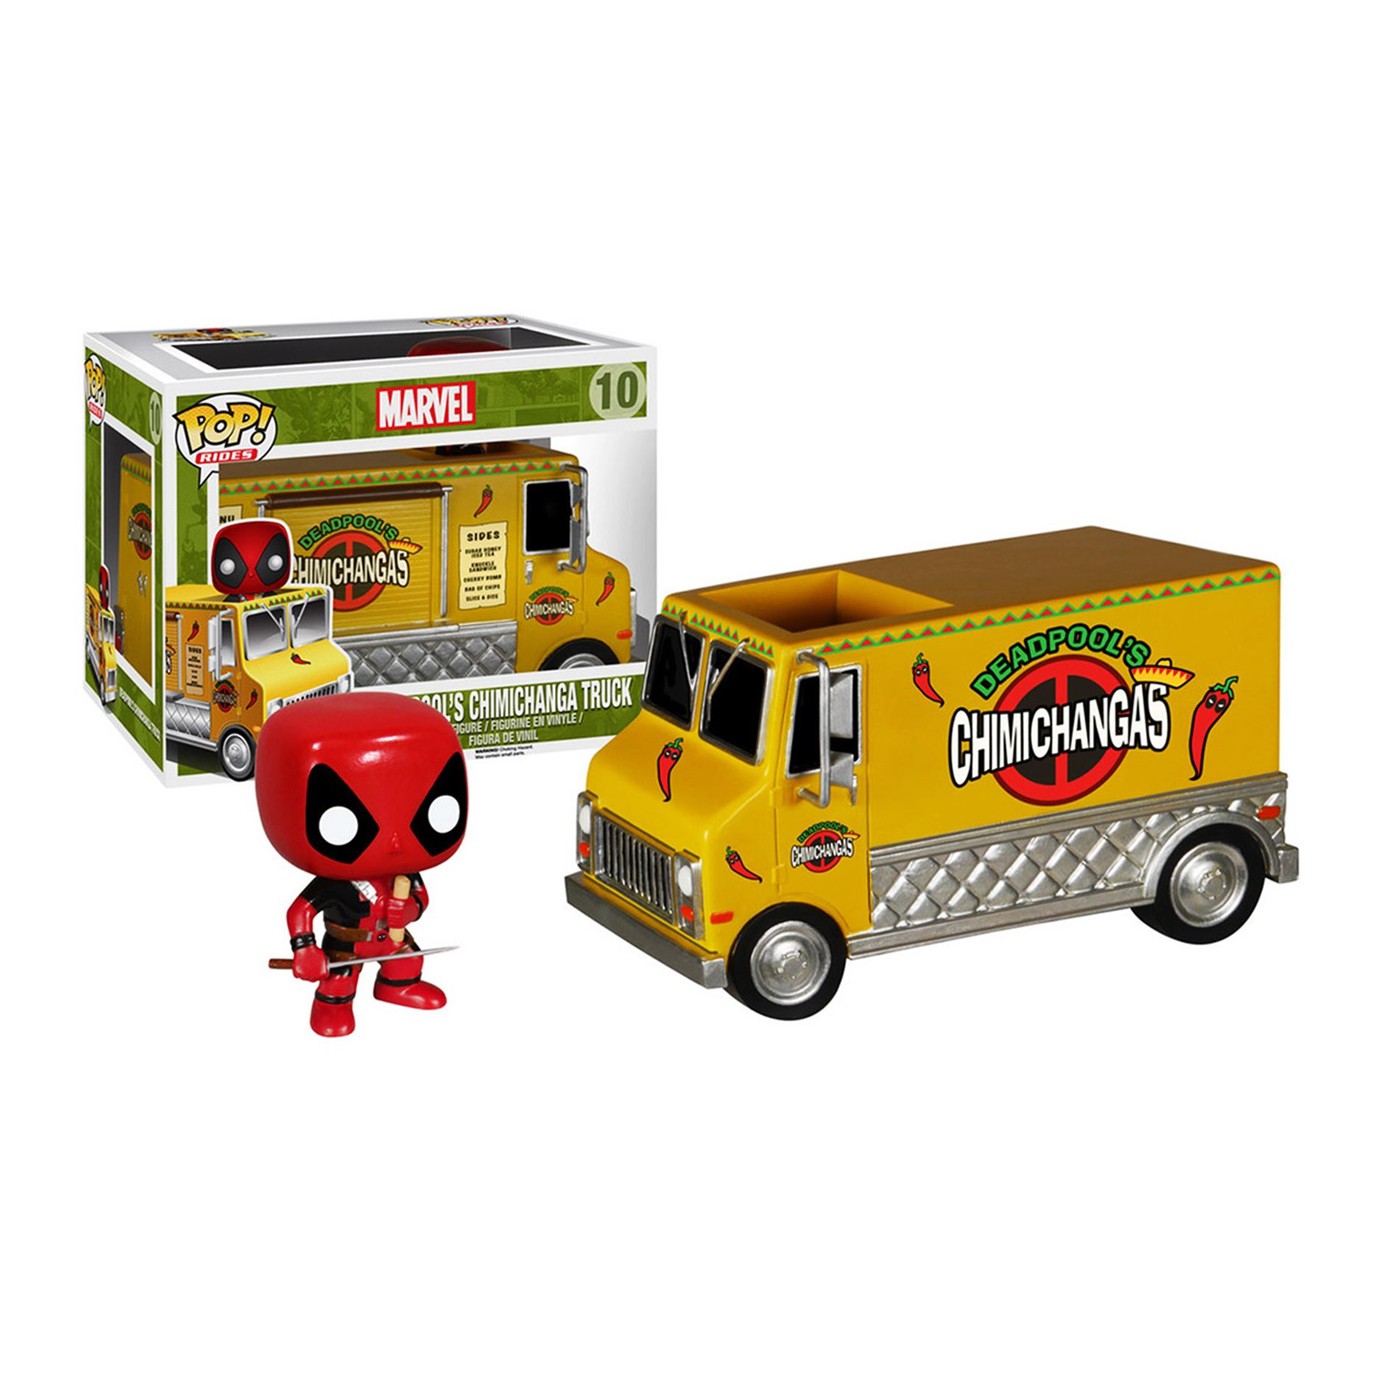 Deadpool POP Fun Bobblehead and Chimichanga Truck